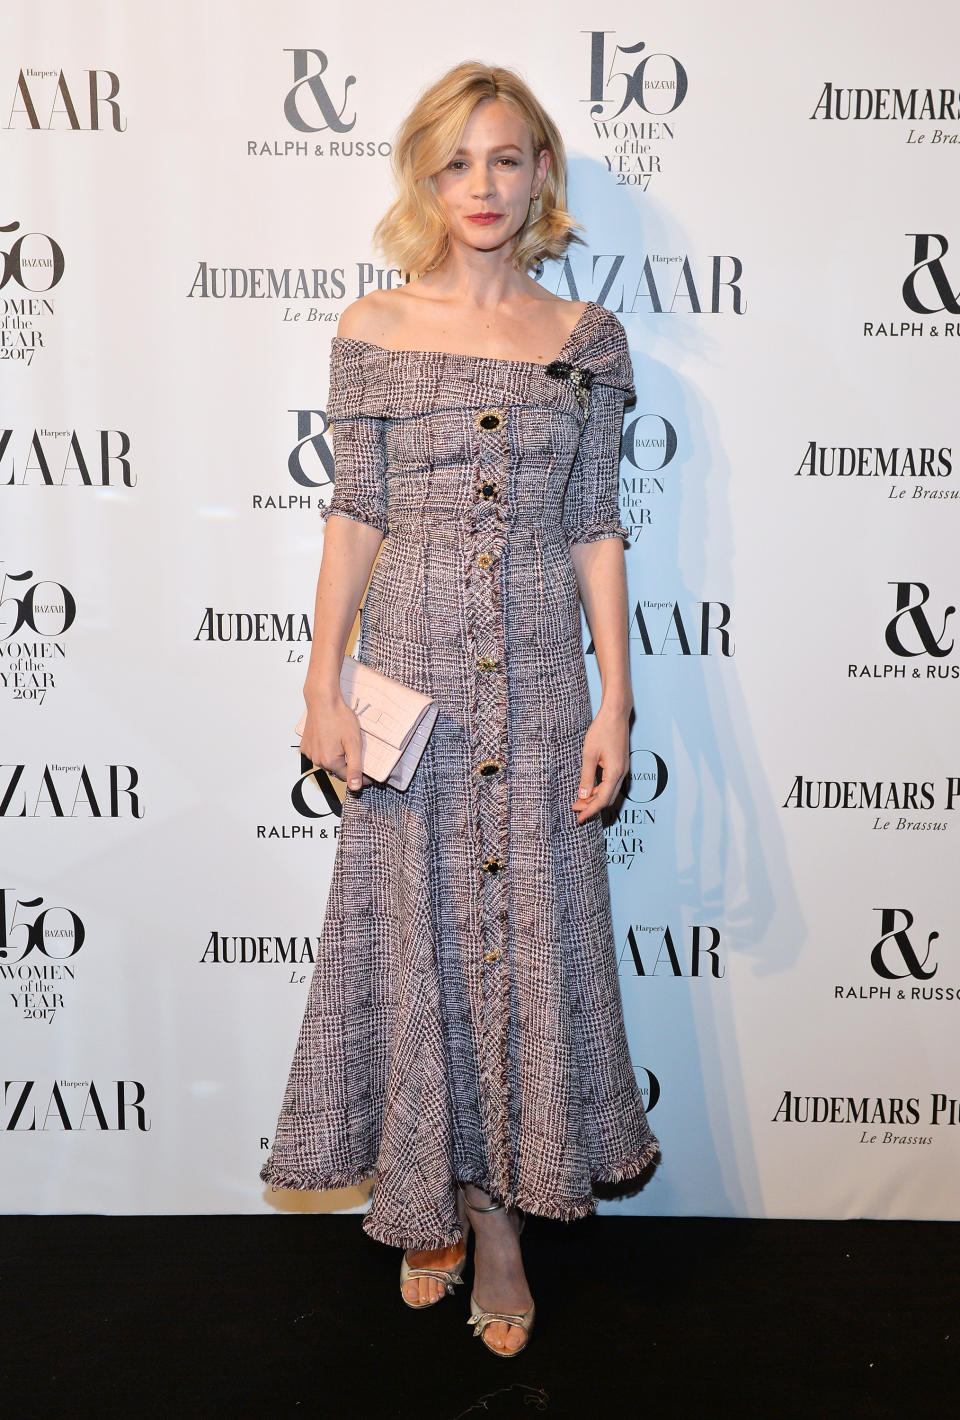 Carey Mulligan at the Harper’s Bazaar Women of the Year Awards